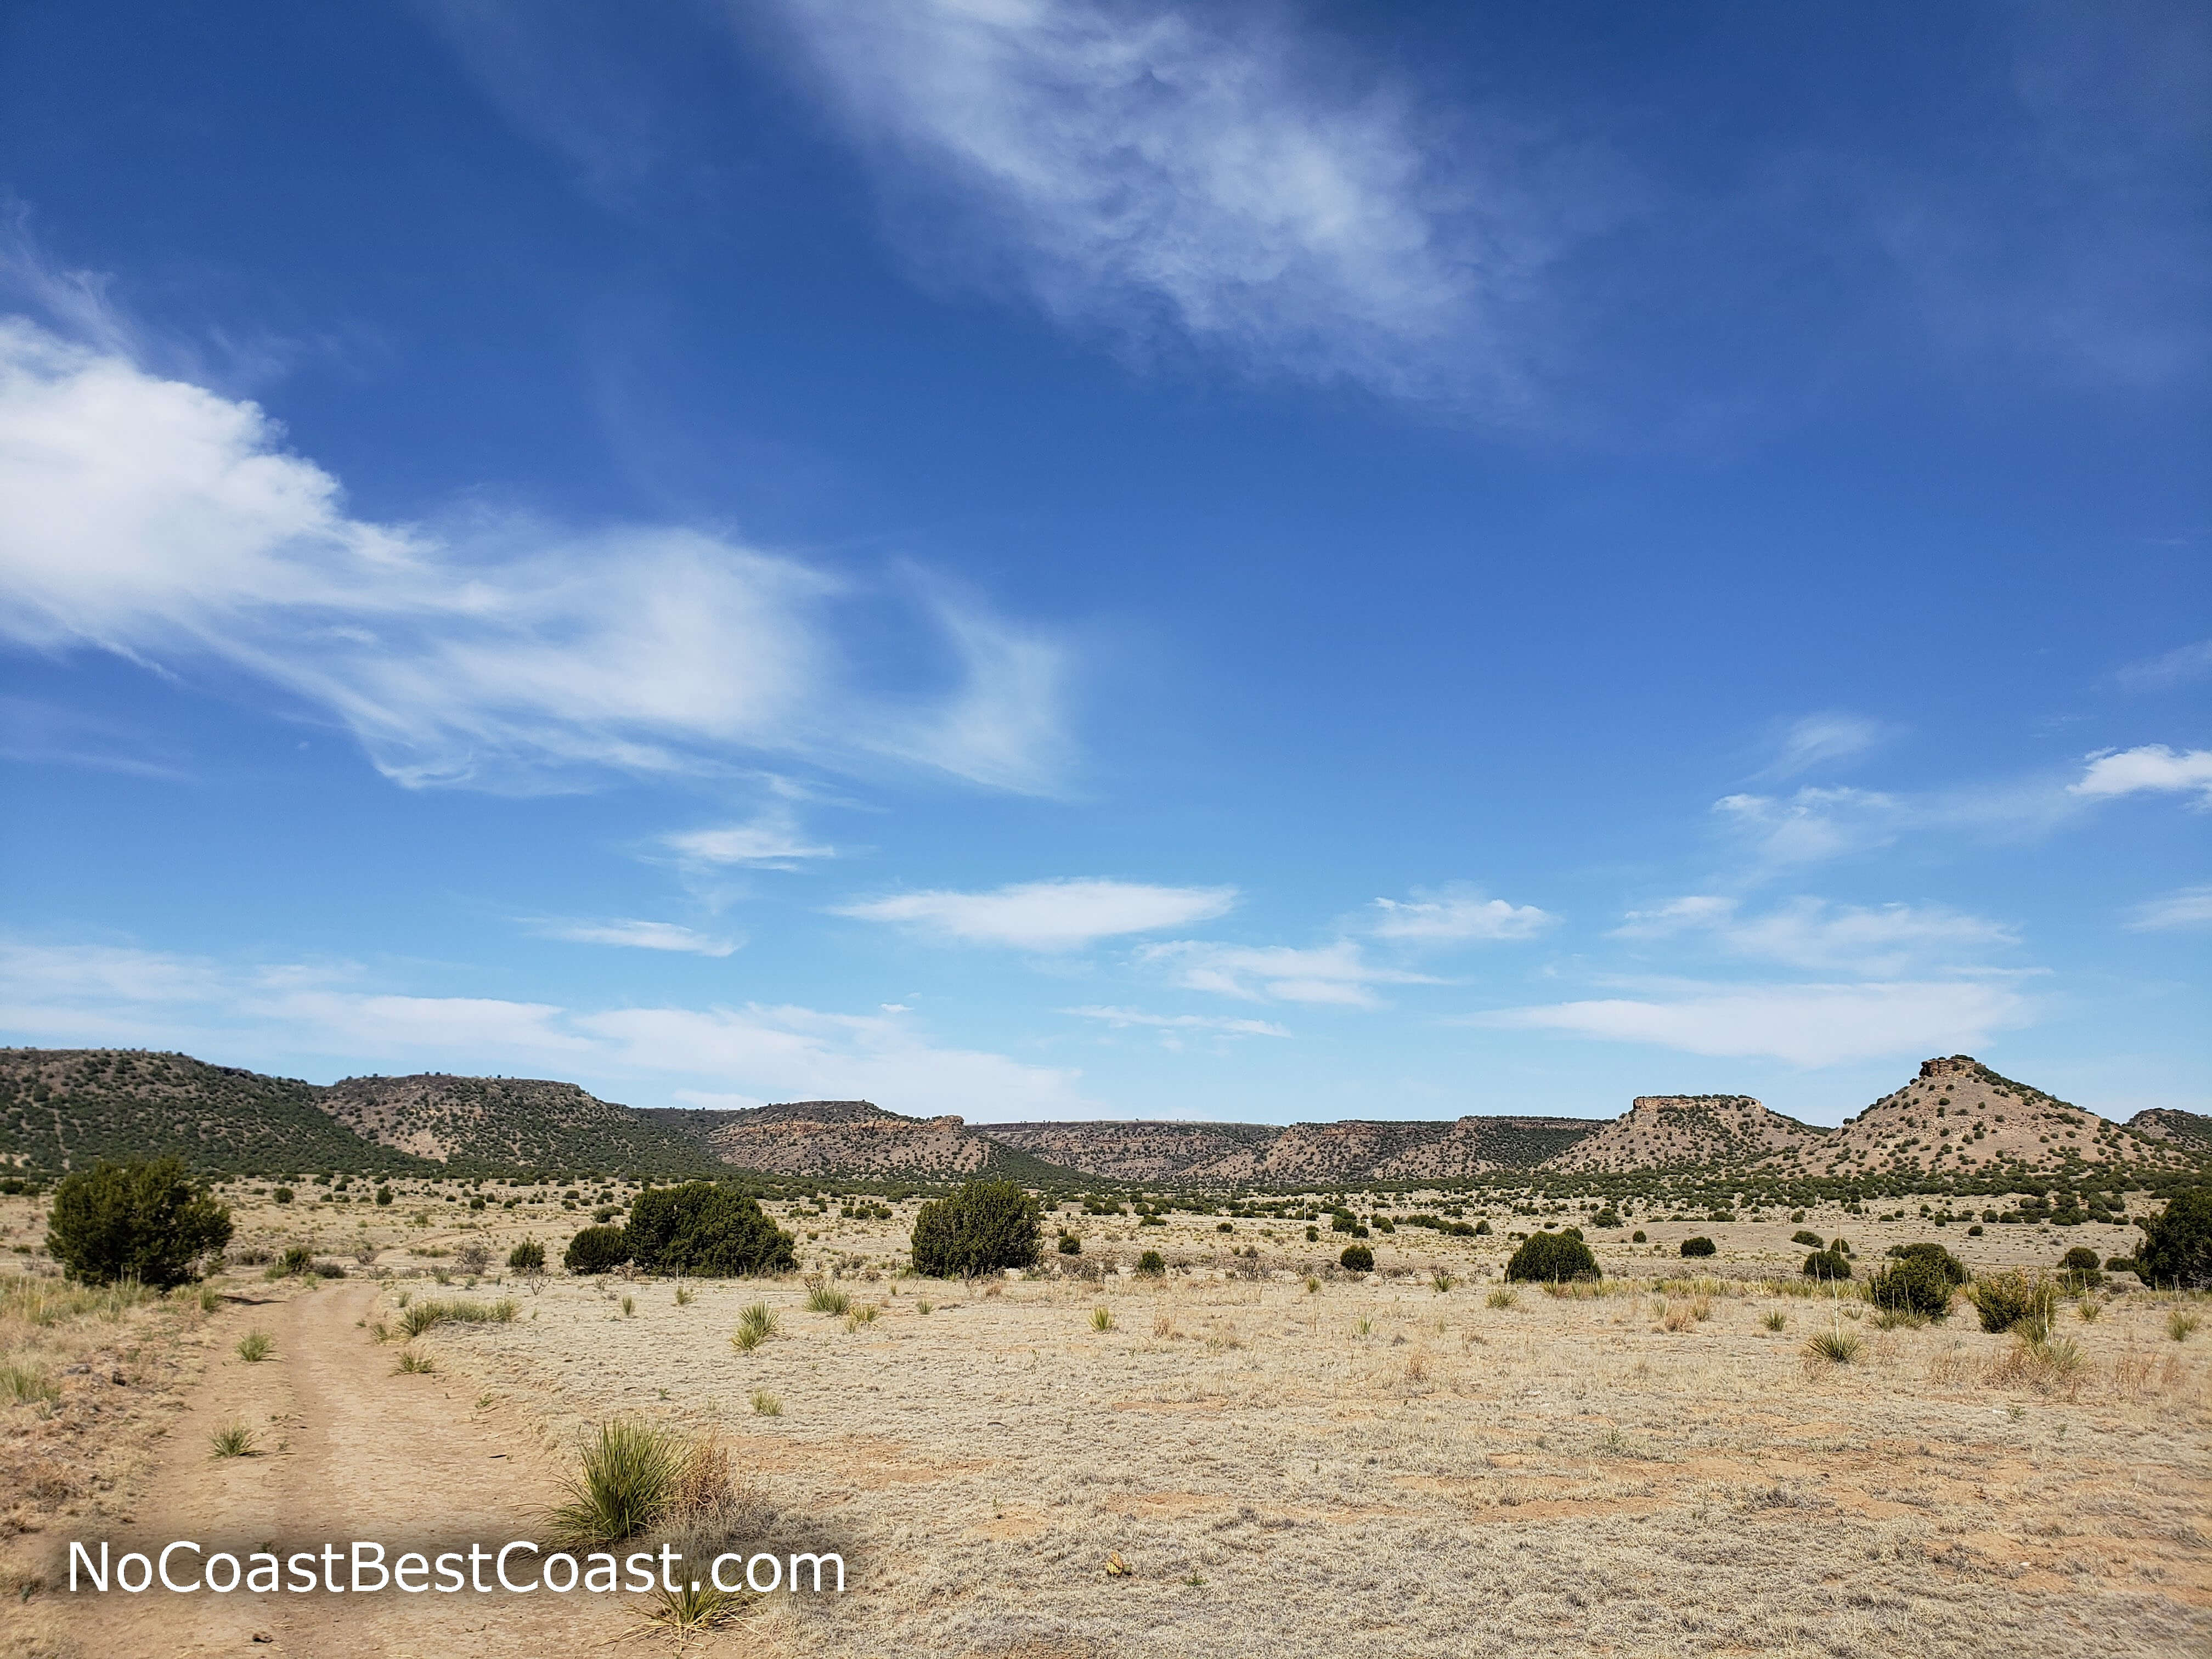 The surprisingly arid landscape of Western Oklahoma